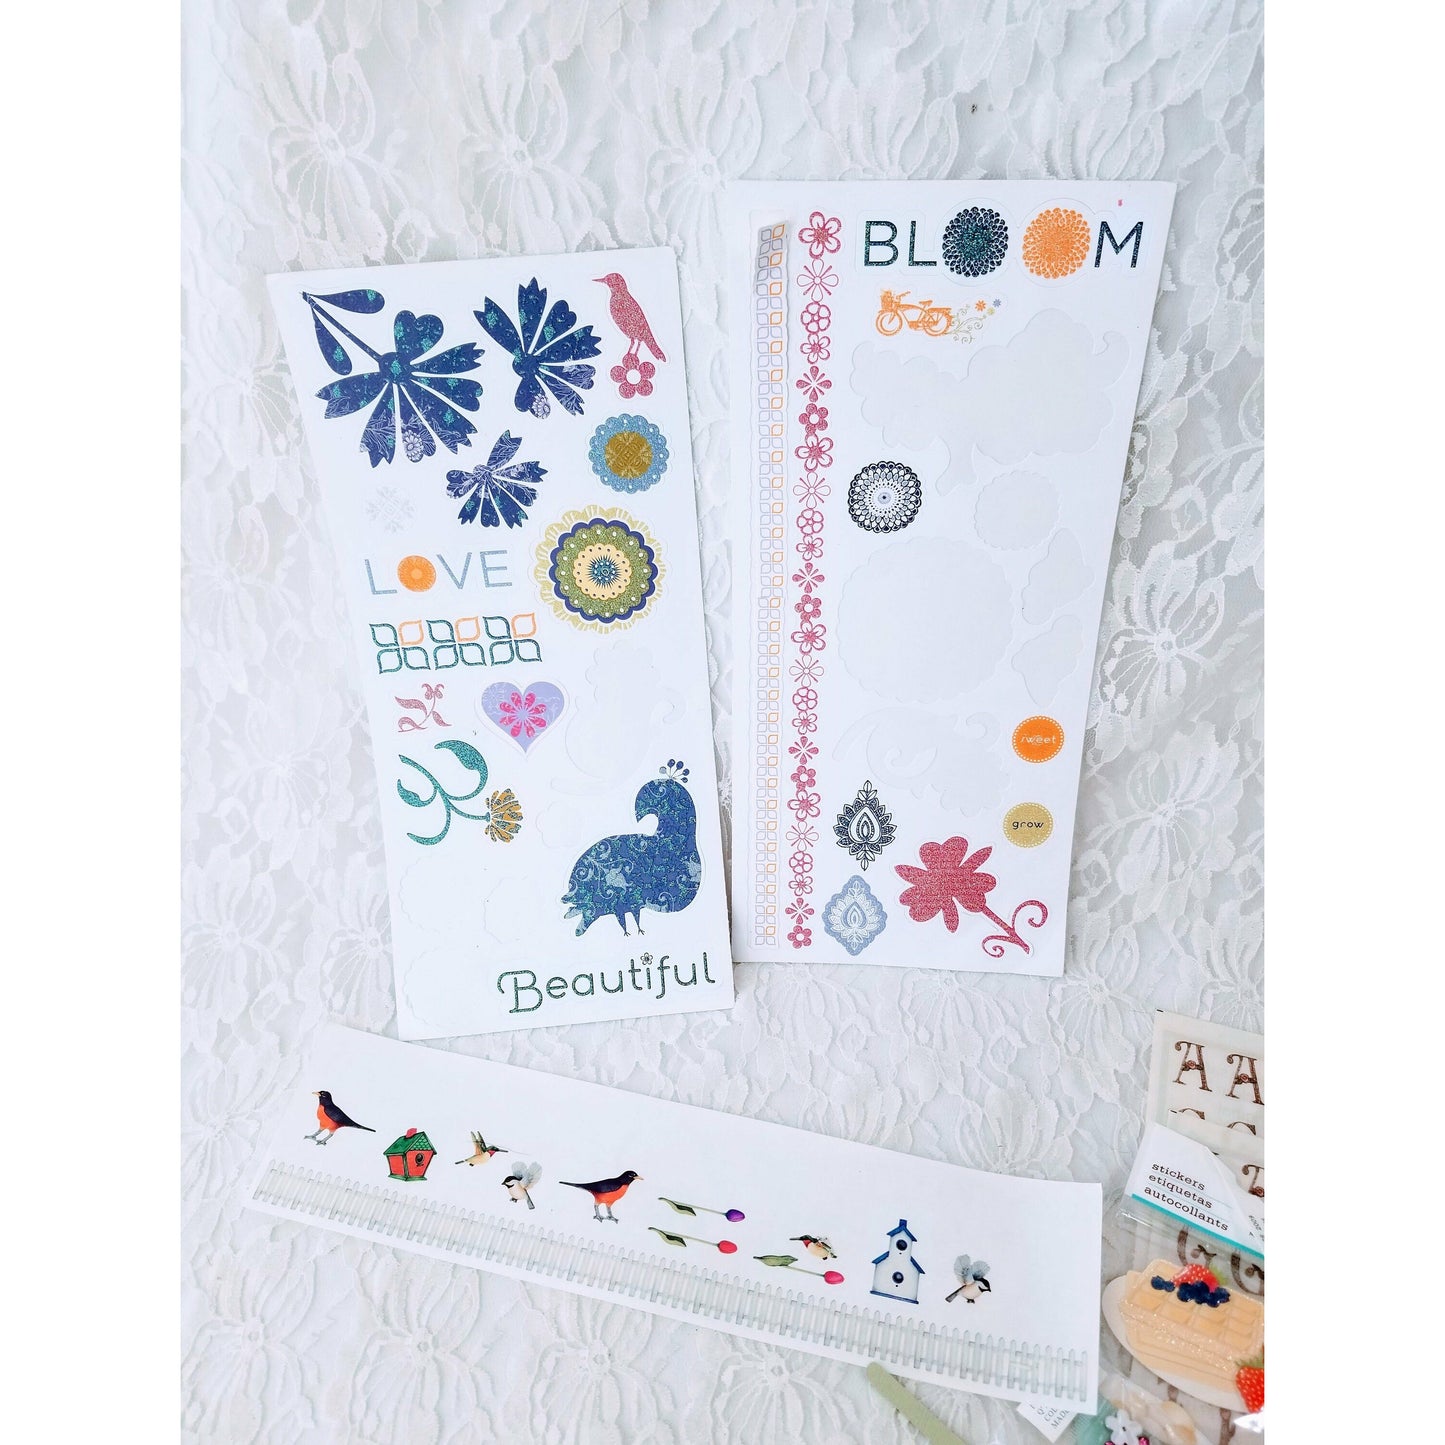 SCRAPBOOKING ~ LOT of Die Cut Border Stickers ~ Garden, Spring, Flowers, Brads, & Scrapbooking Supplies for Paper Crafts, Card-making, Scrapbooks